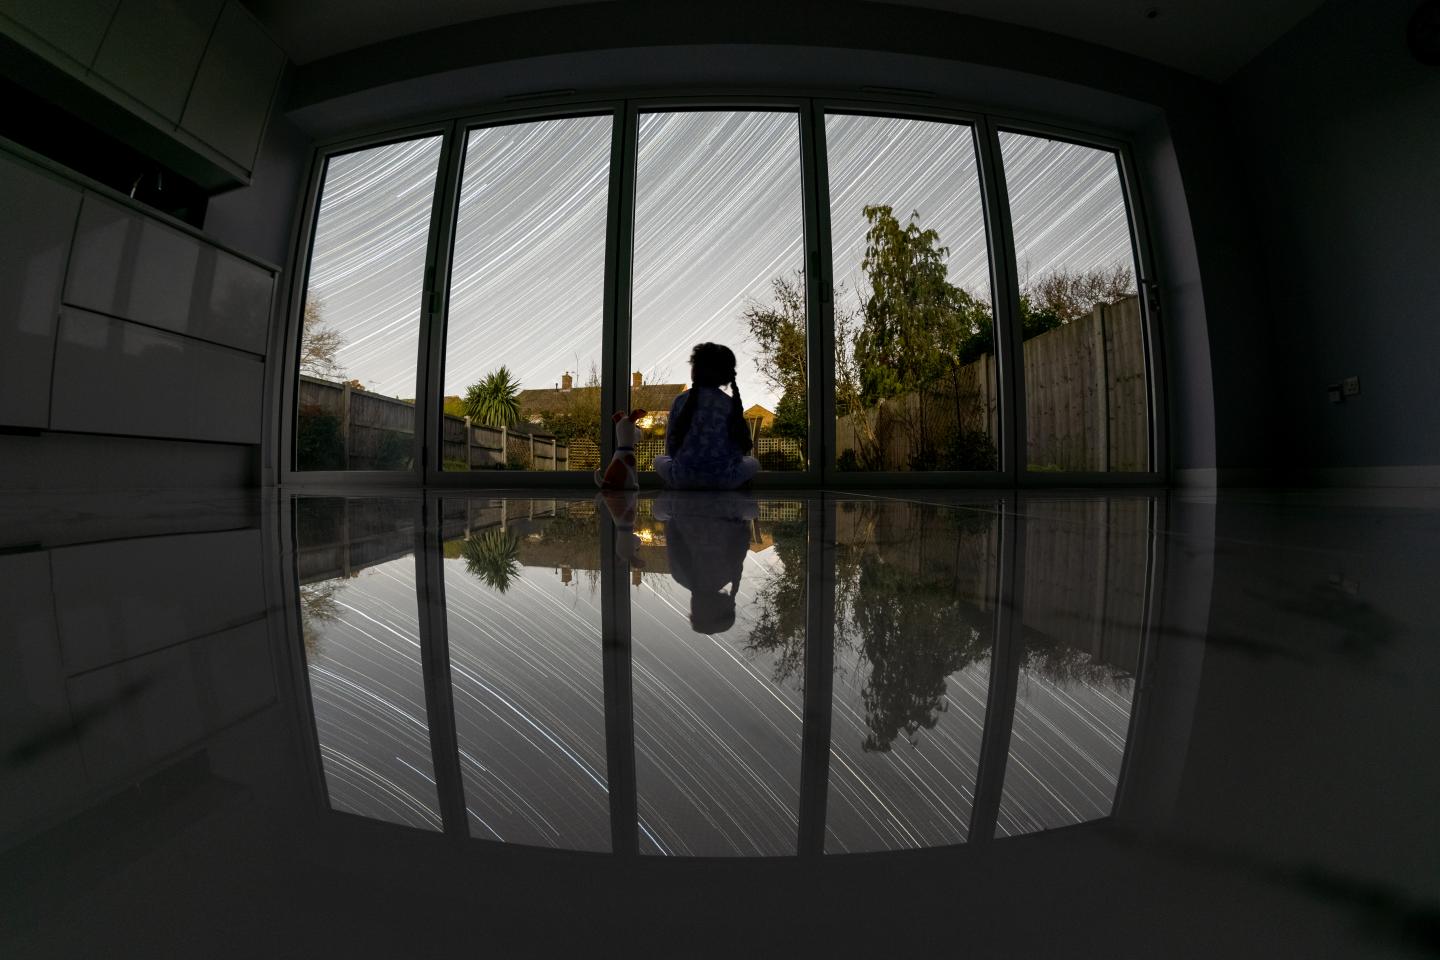 A girl sits behind bi-folding doors overlooking a garden. Star trails cross the sky above